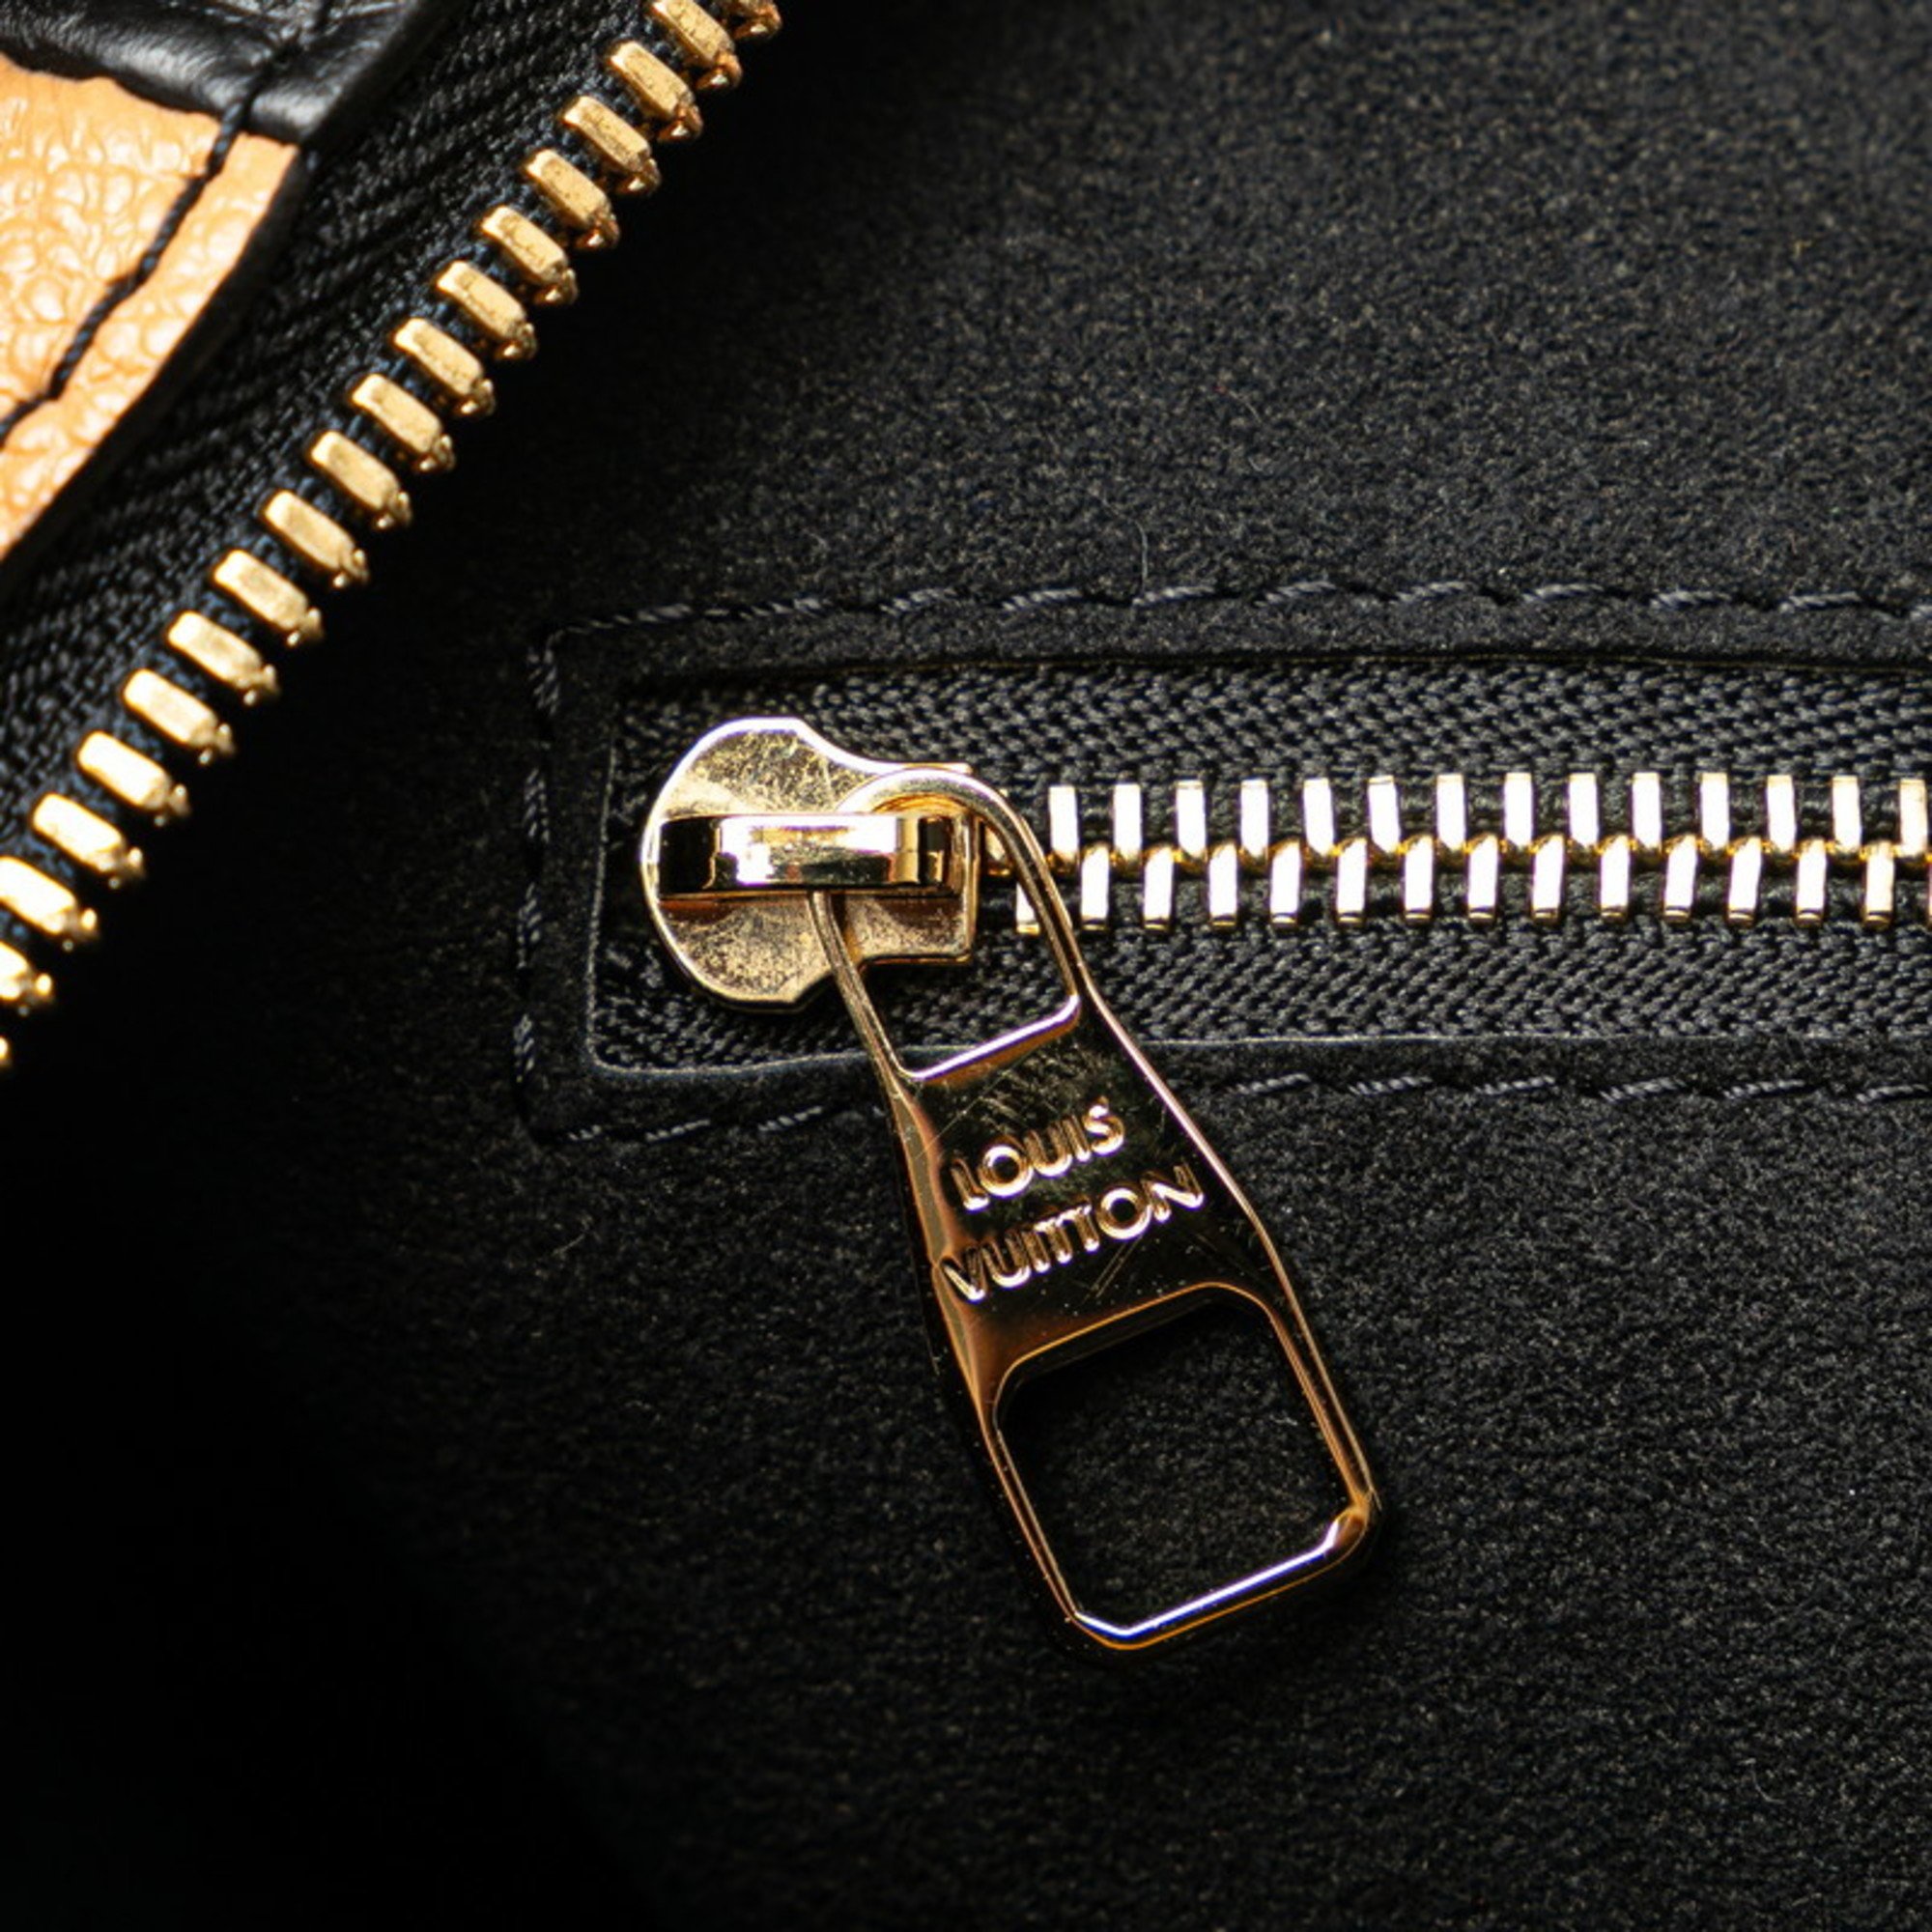 Louis Vuitton Monogram Empreinte Wild at Heart Speedy Bandouliere 25 Handbag Shoulder Bag M58524 Black Brown Leather Women's LOUIS VUITTON